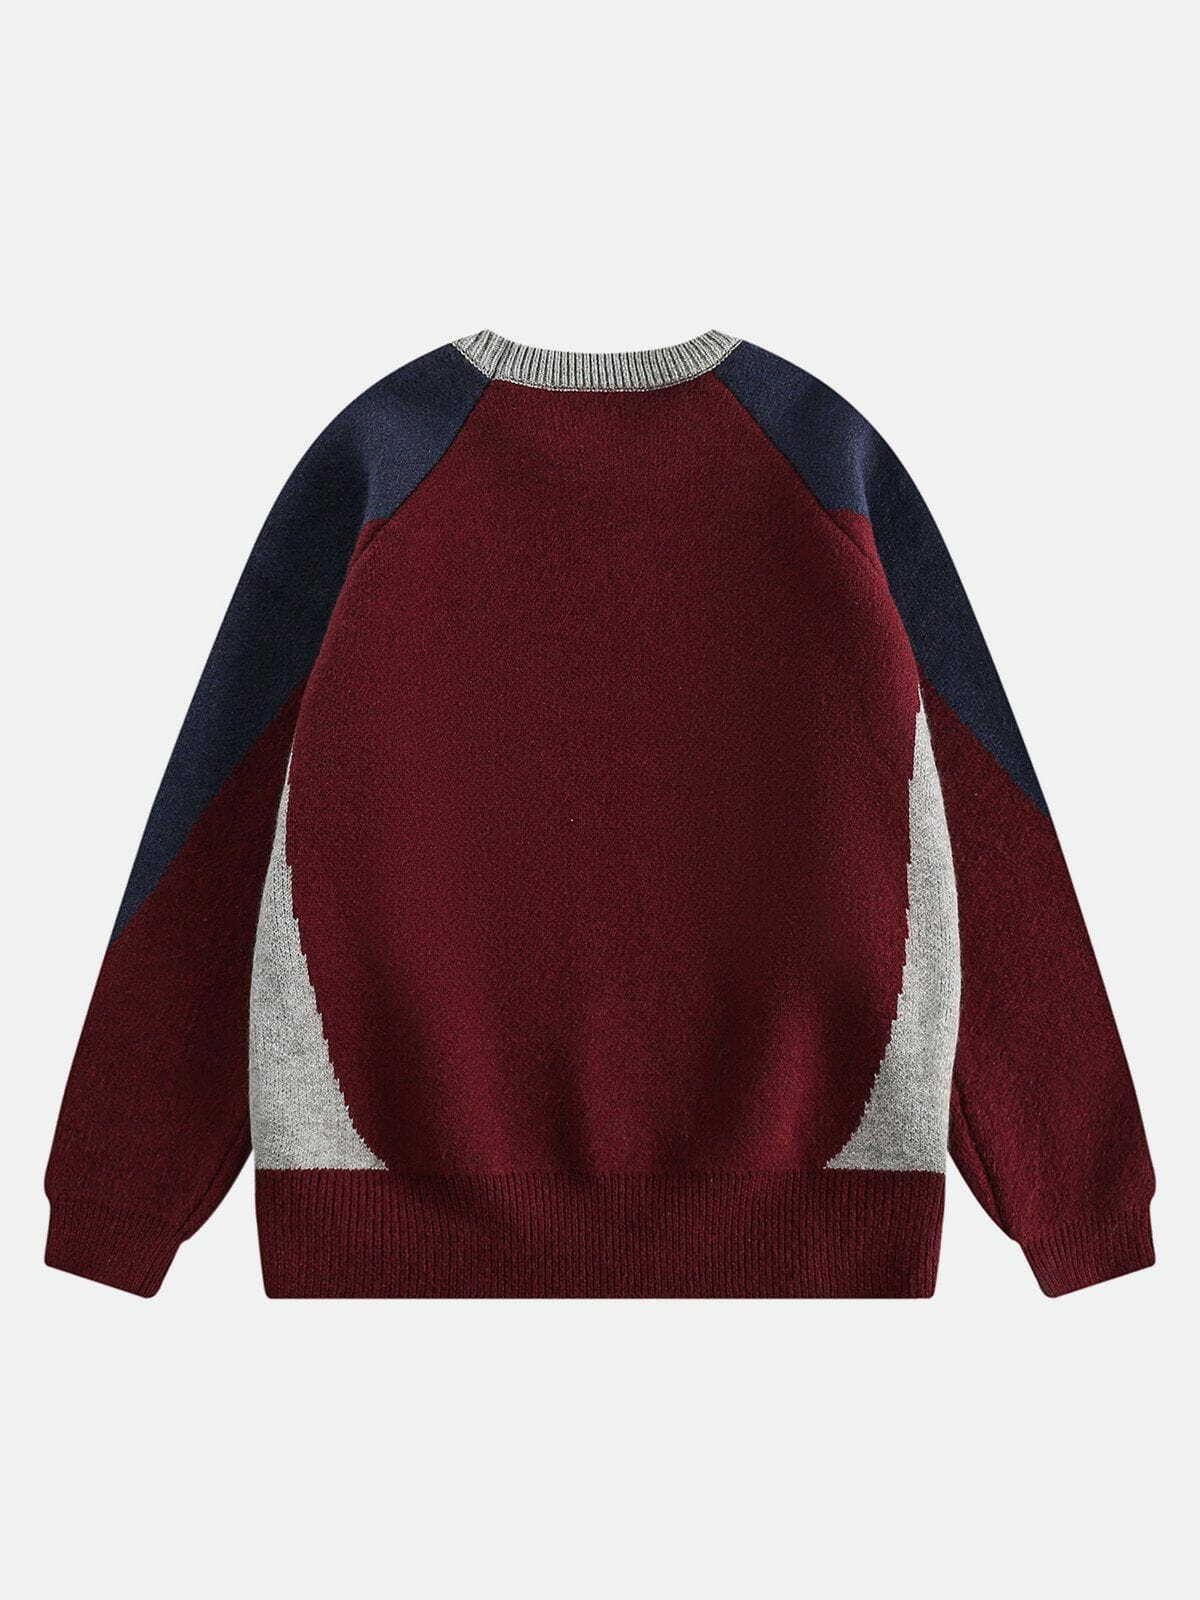 bold color block sweater   youthful & trendy streetwear 6862